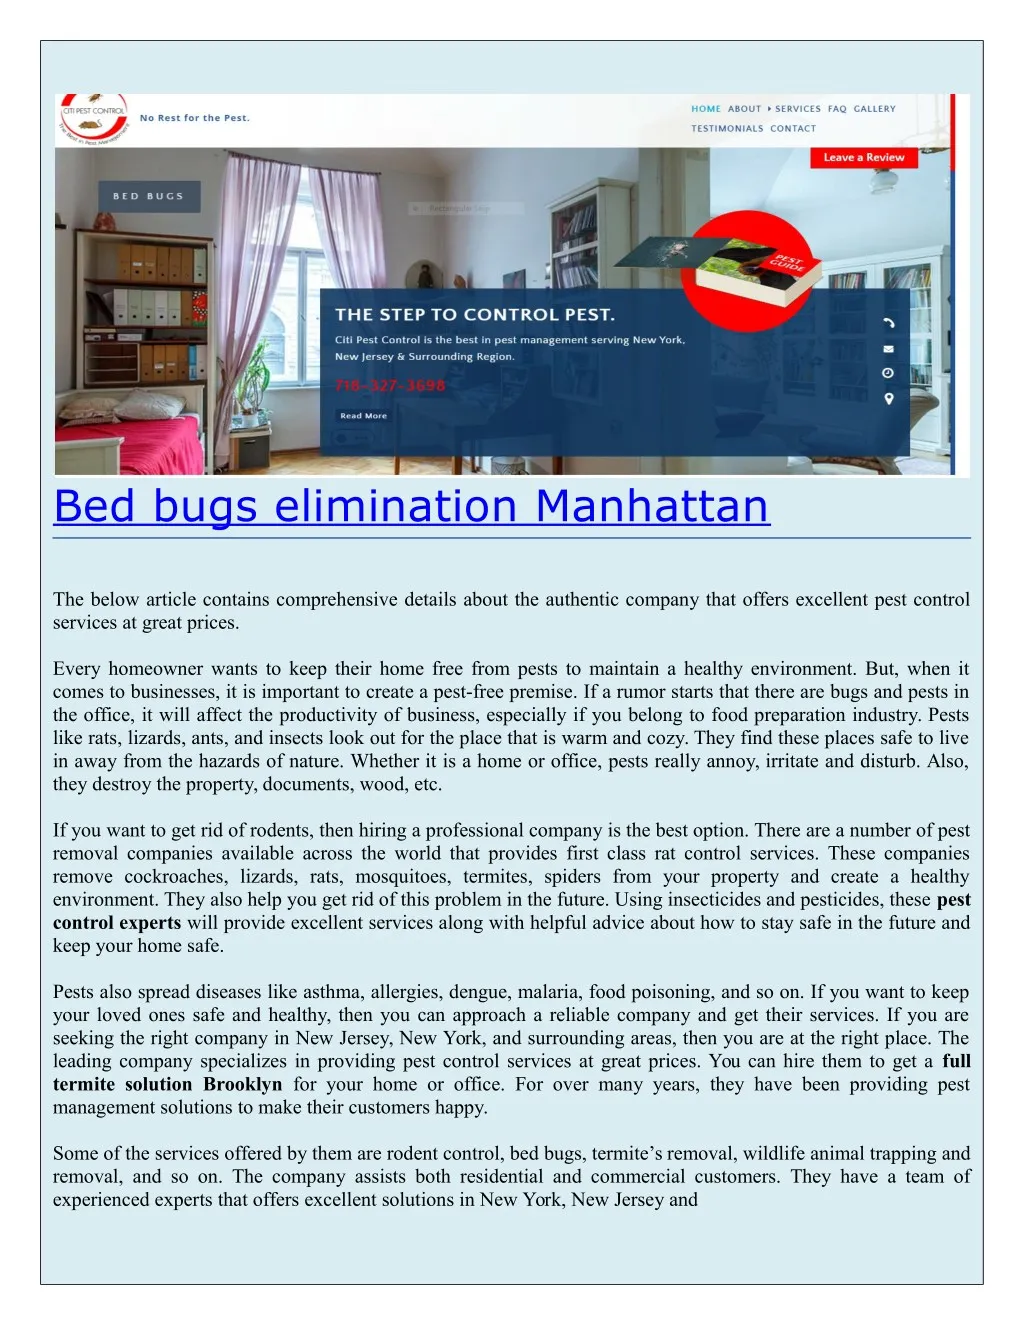 bed bugs elimination manhattan